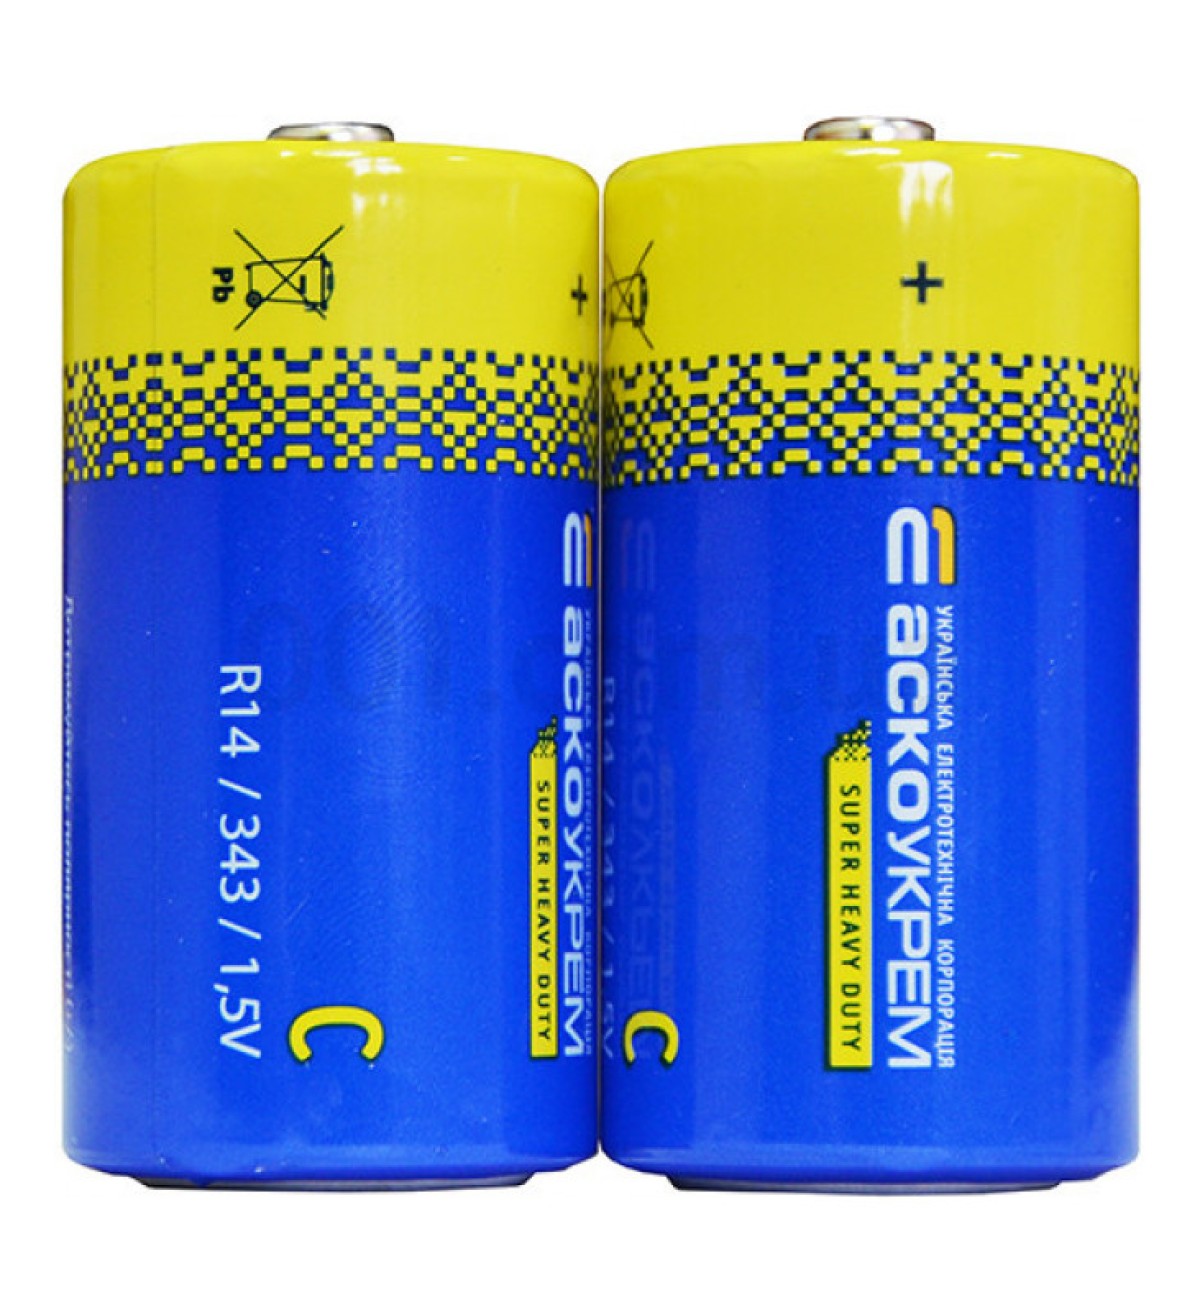 Батарейка солевая С.R14.SP2, типоразмер C упаковка shrink 2 шт., АСКО-УКРЕМ 256_280.jpg